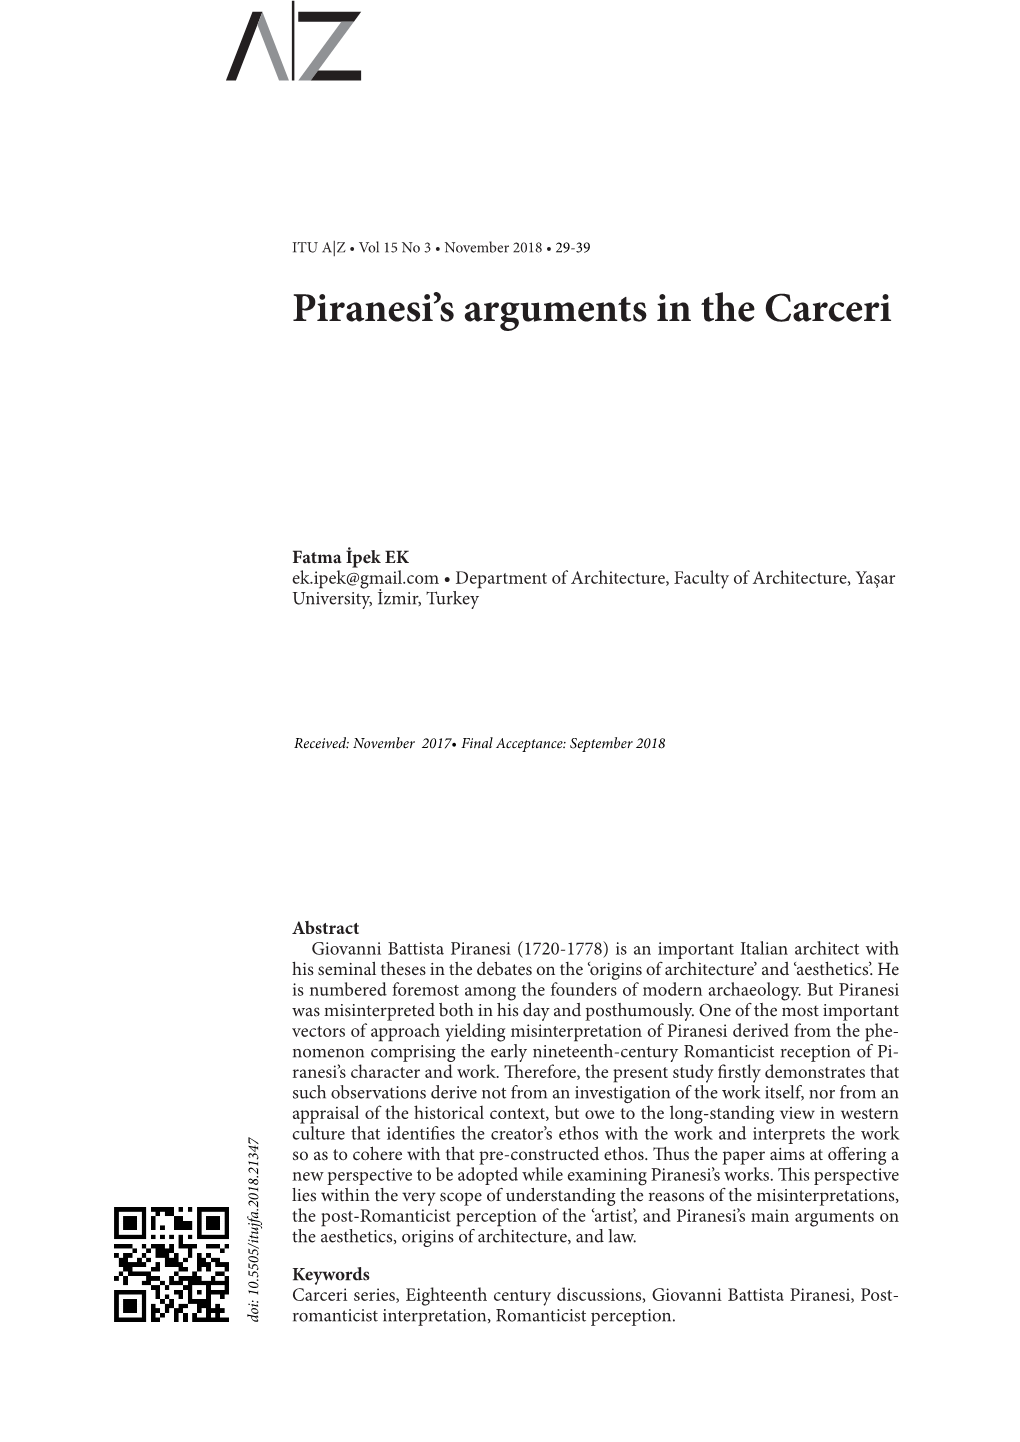 Piranesi's Arguments in the Carceri